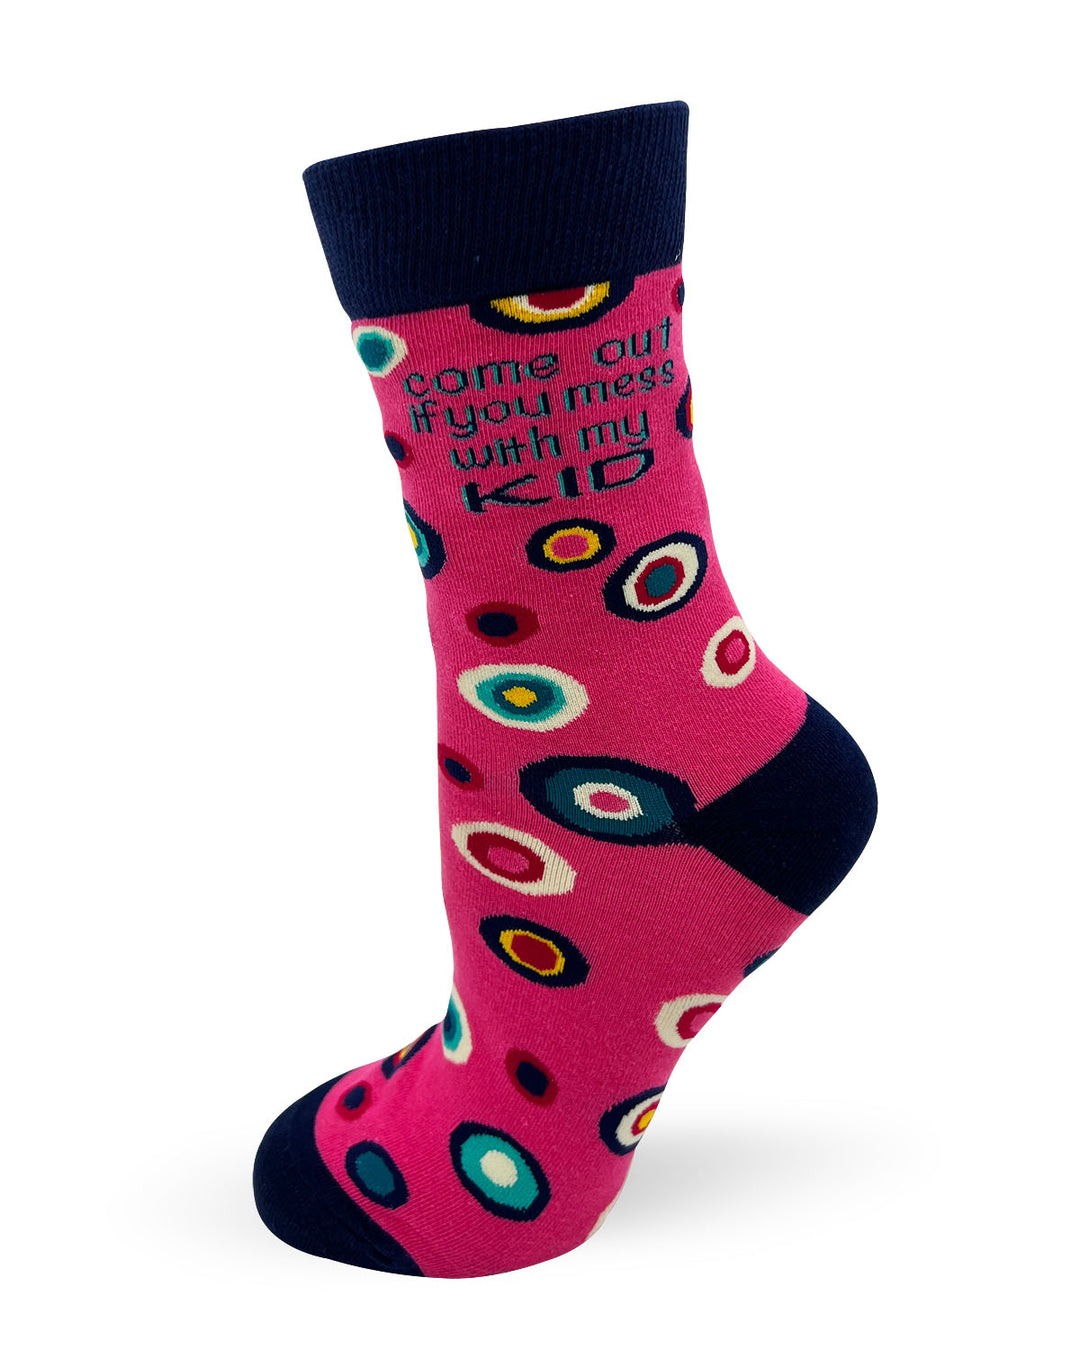 Fabdaz funny socks for ladies'